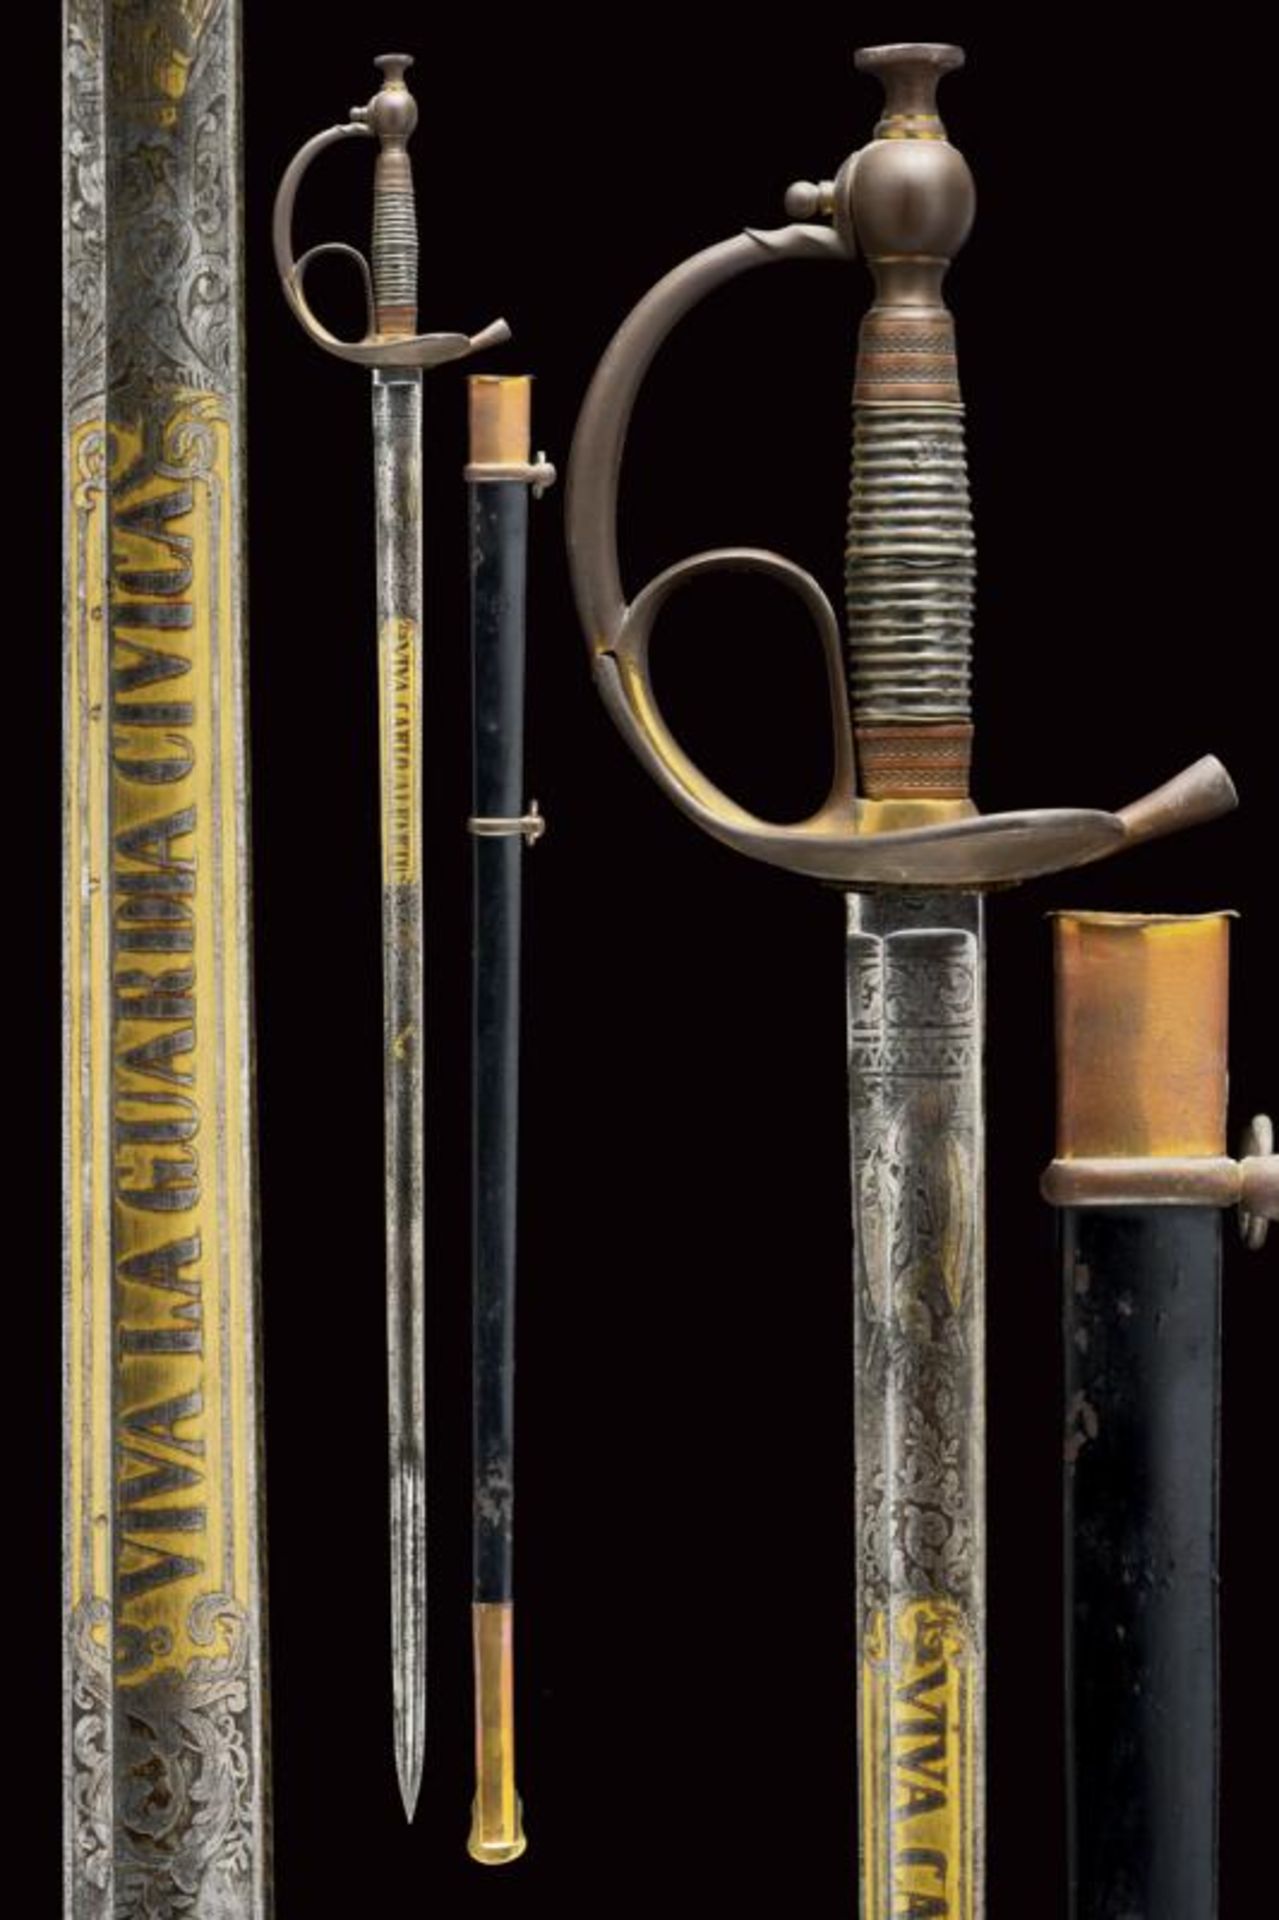 An 1833 model 'Albertina' sword with beautiful blade